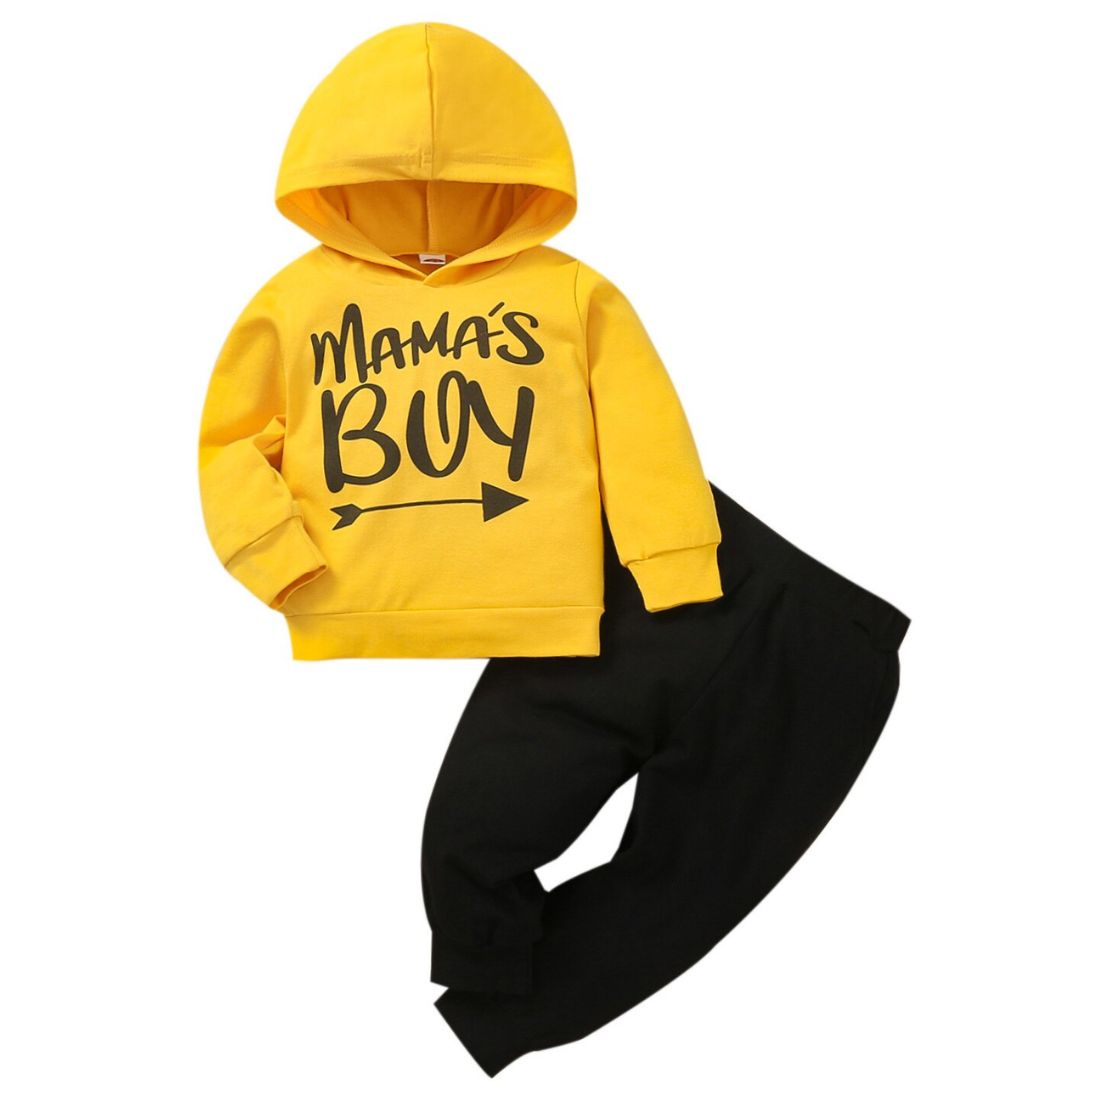 A baby boys yellow hooded sweatshirt and black pants with mamas boys print